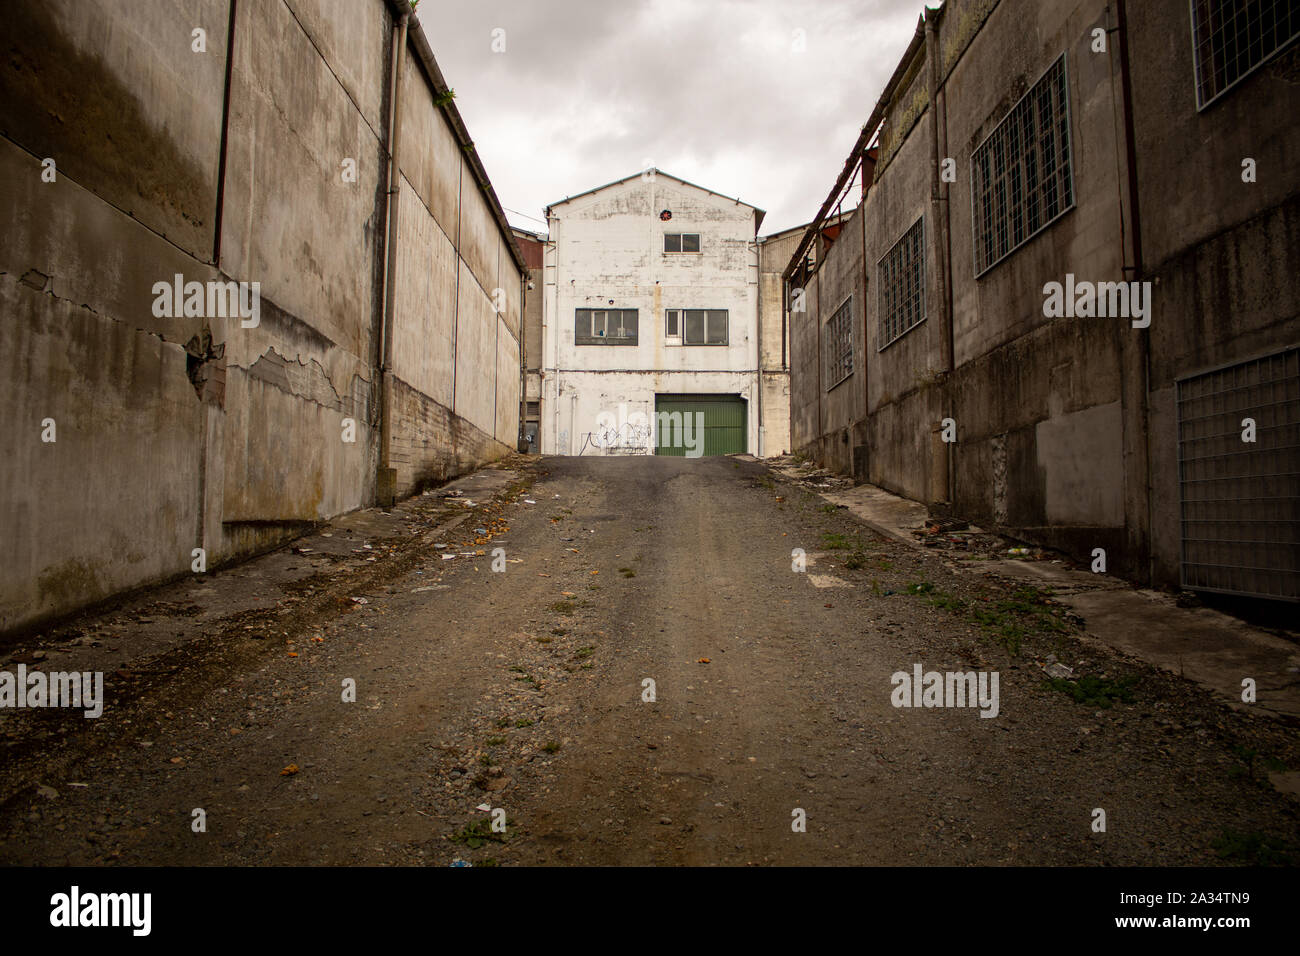 Coruna / Spain - October 04 2019: Abandoned warehouse buildings with broken windows and shutters in Coruna Spain. Stock Photo